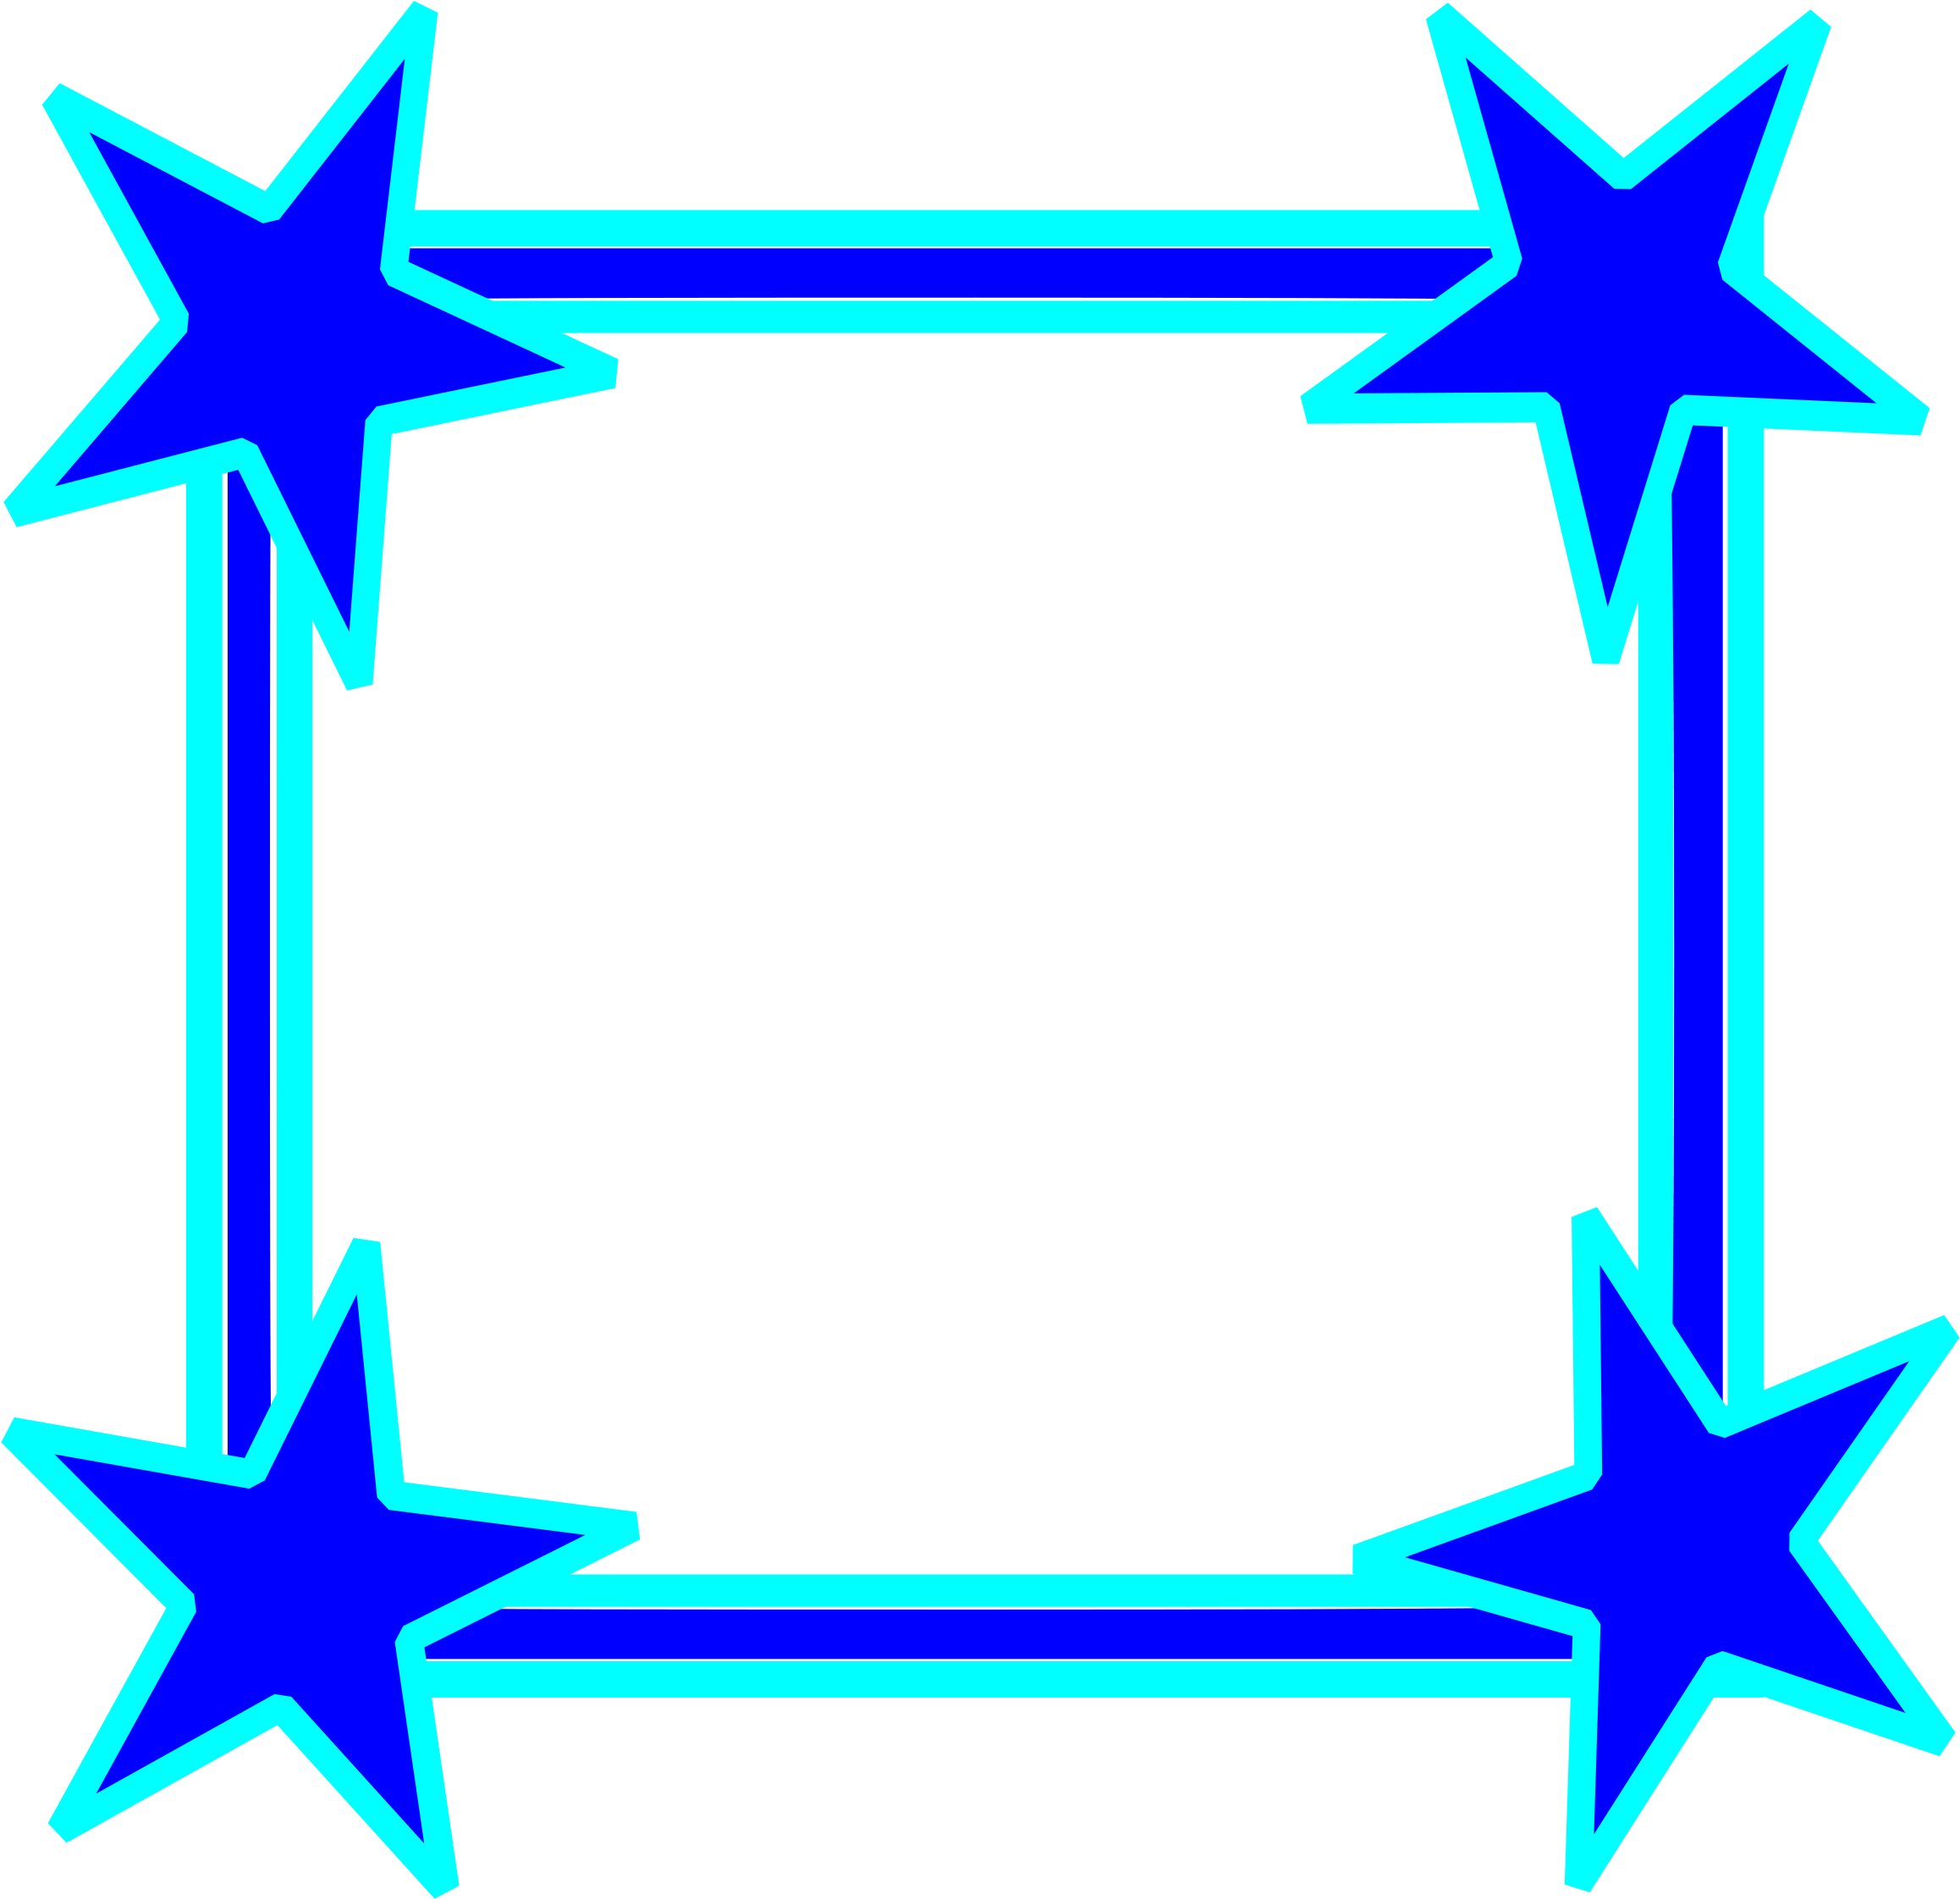 Рамка звездочки. Рамка из звездочек. Синяя рамка на прозрачном фоне. Синяя рамочка на прозрачном фоне.